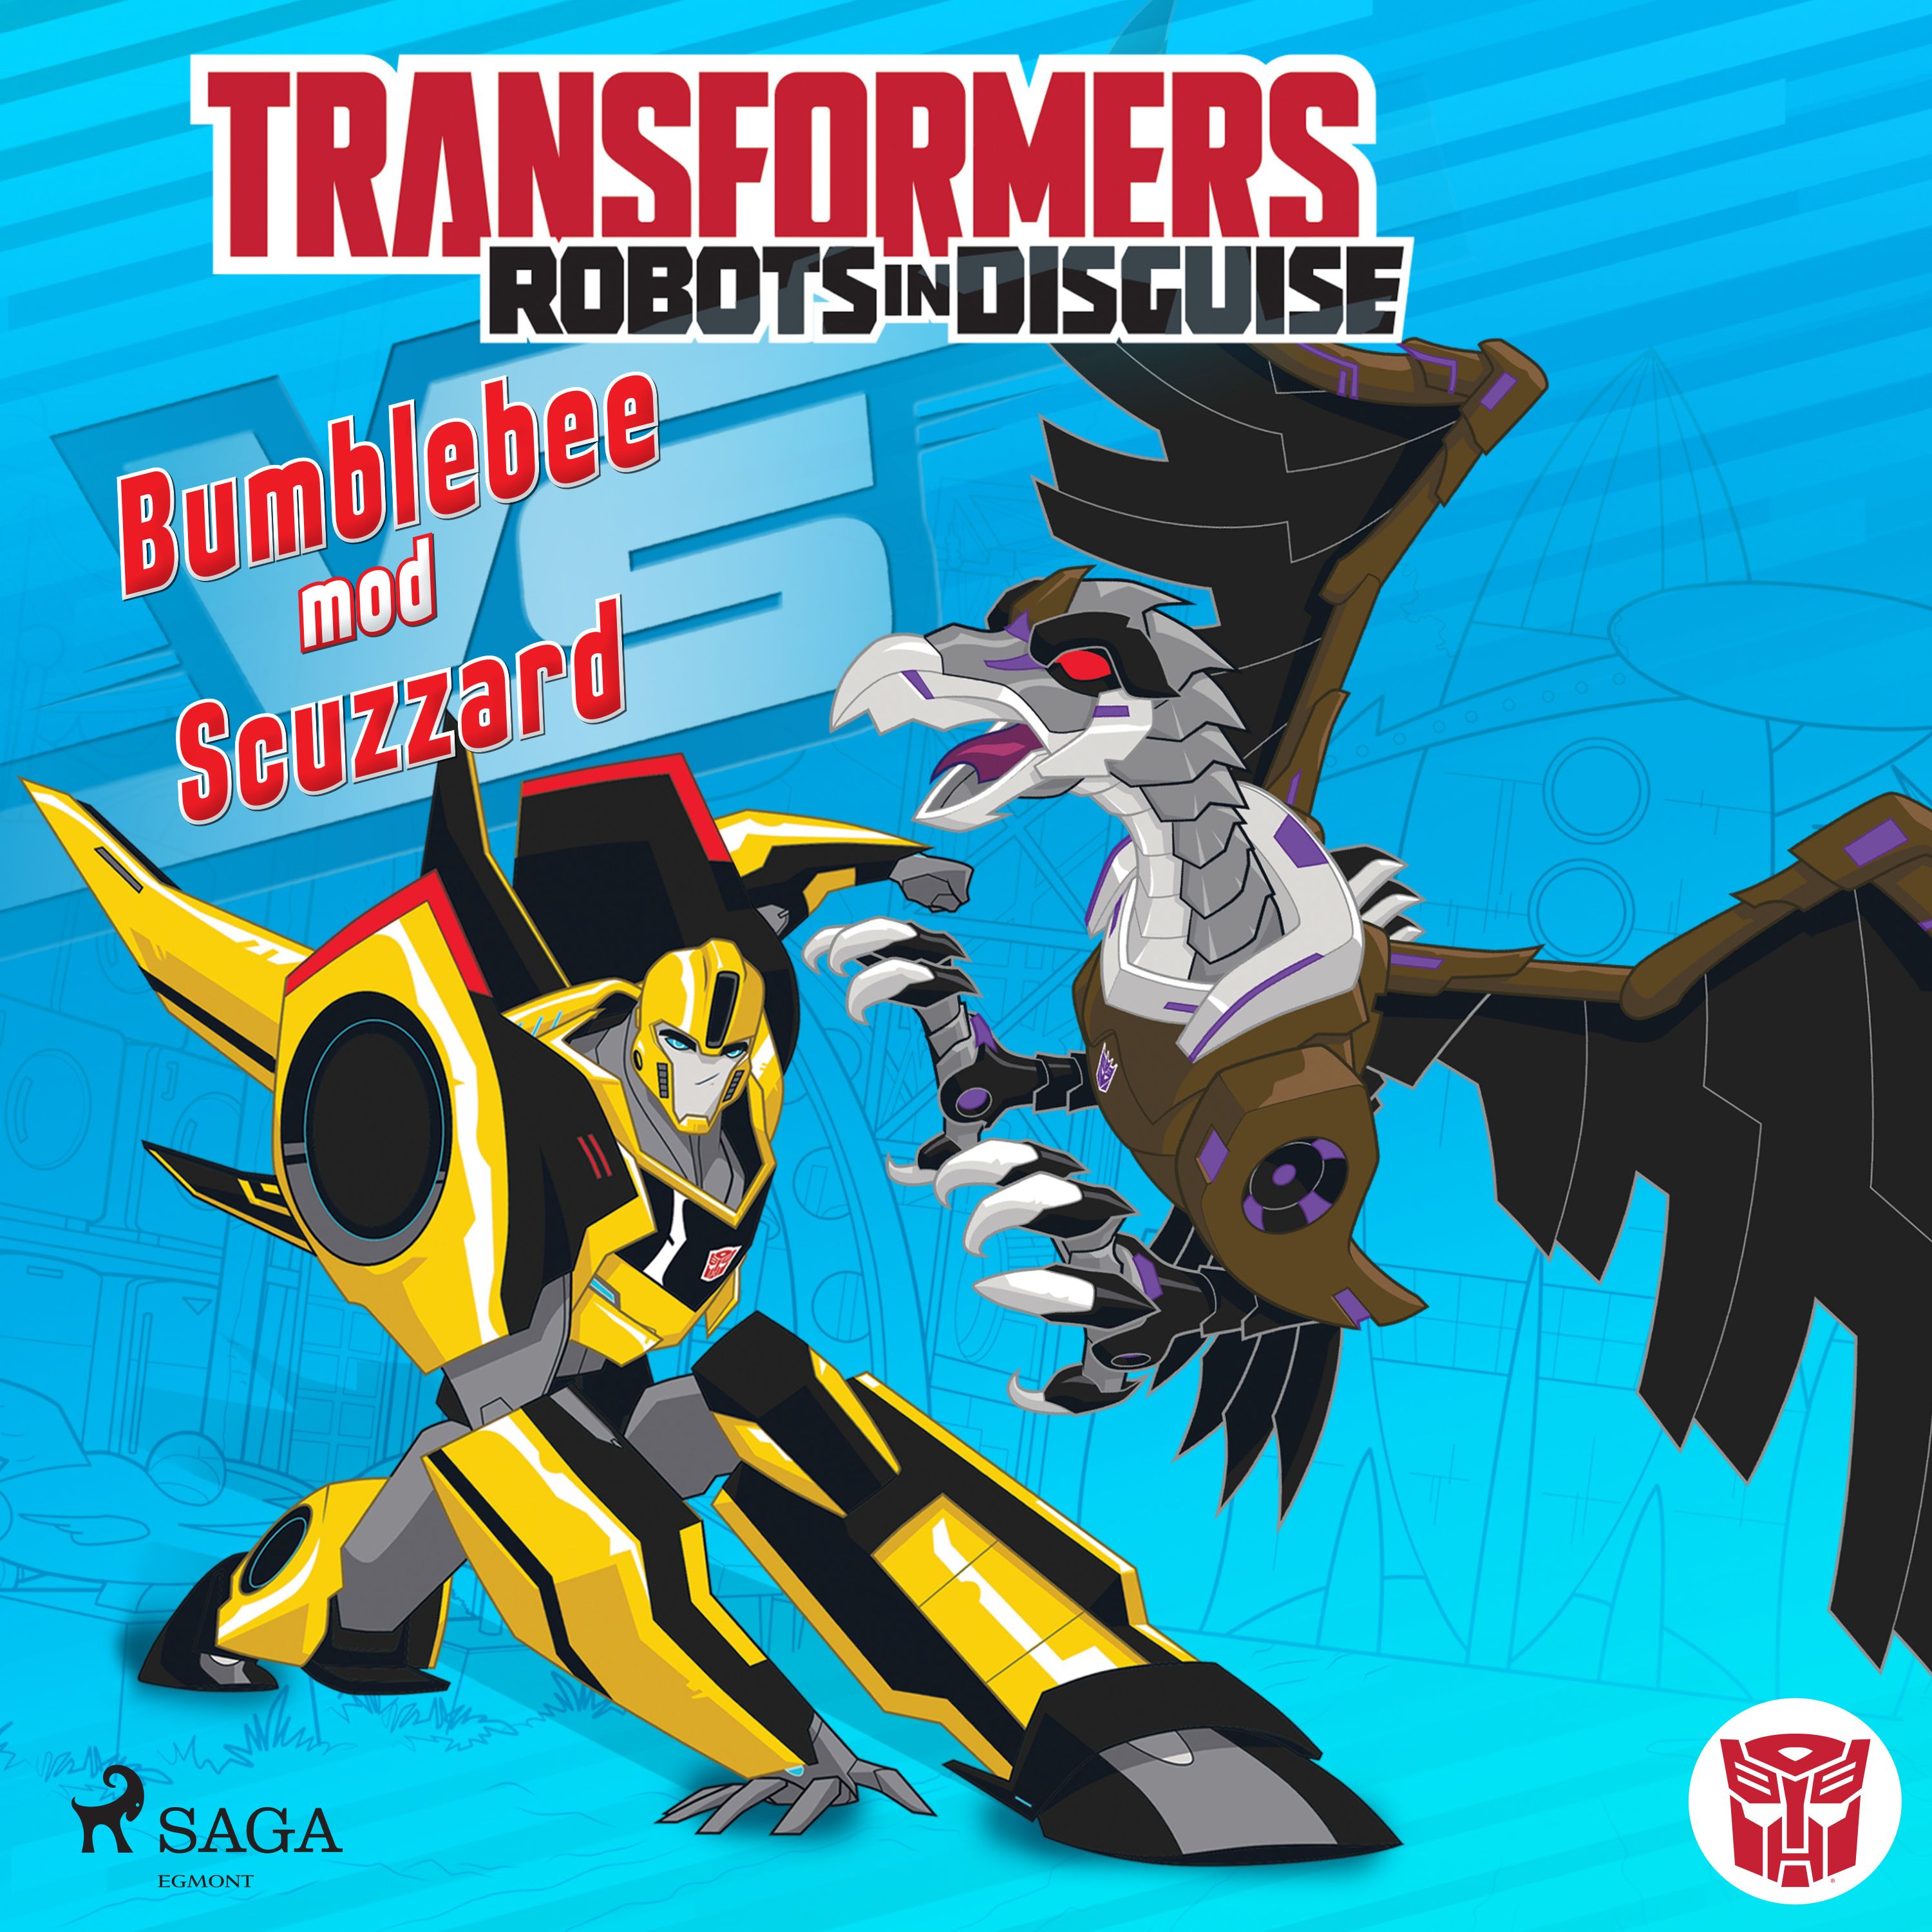 Transformers - Robots in Disguise - Bumblebee mod Scuzzard, ljudbok av John Sazaklis